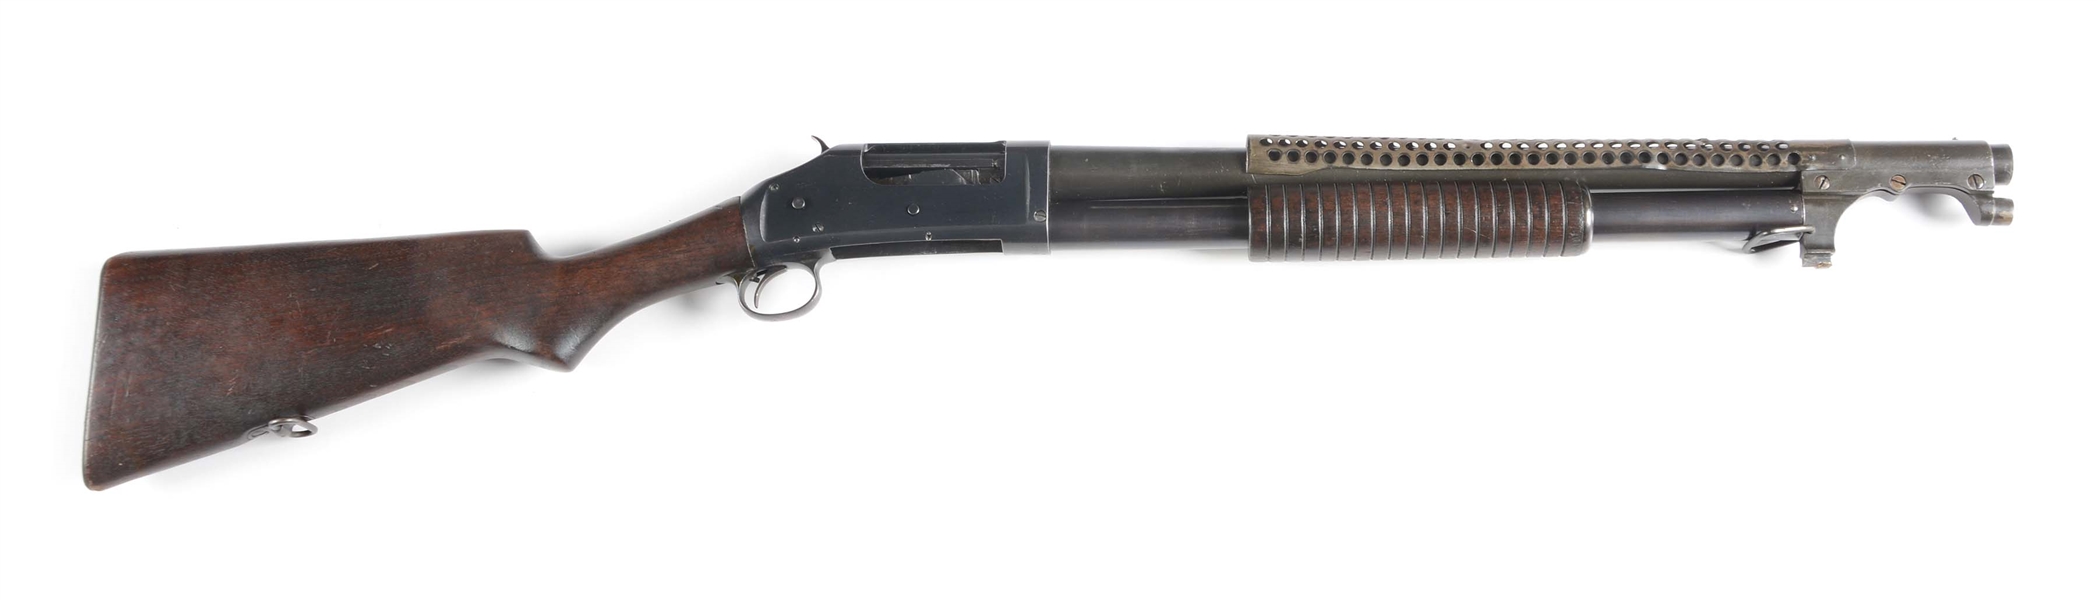 (C) WORLD WAR I WINCHESTER MODEL 1897 TRENCH GUN.